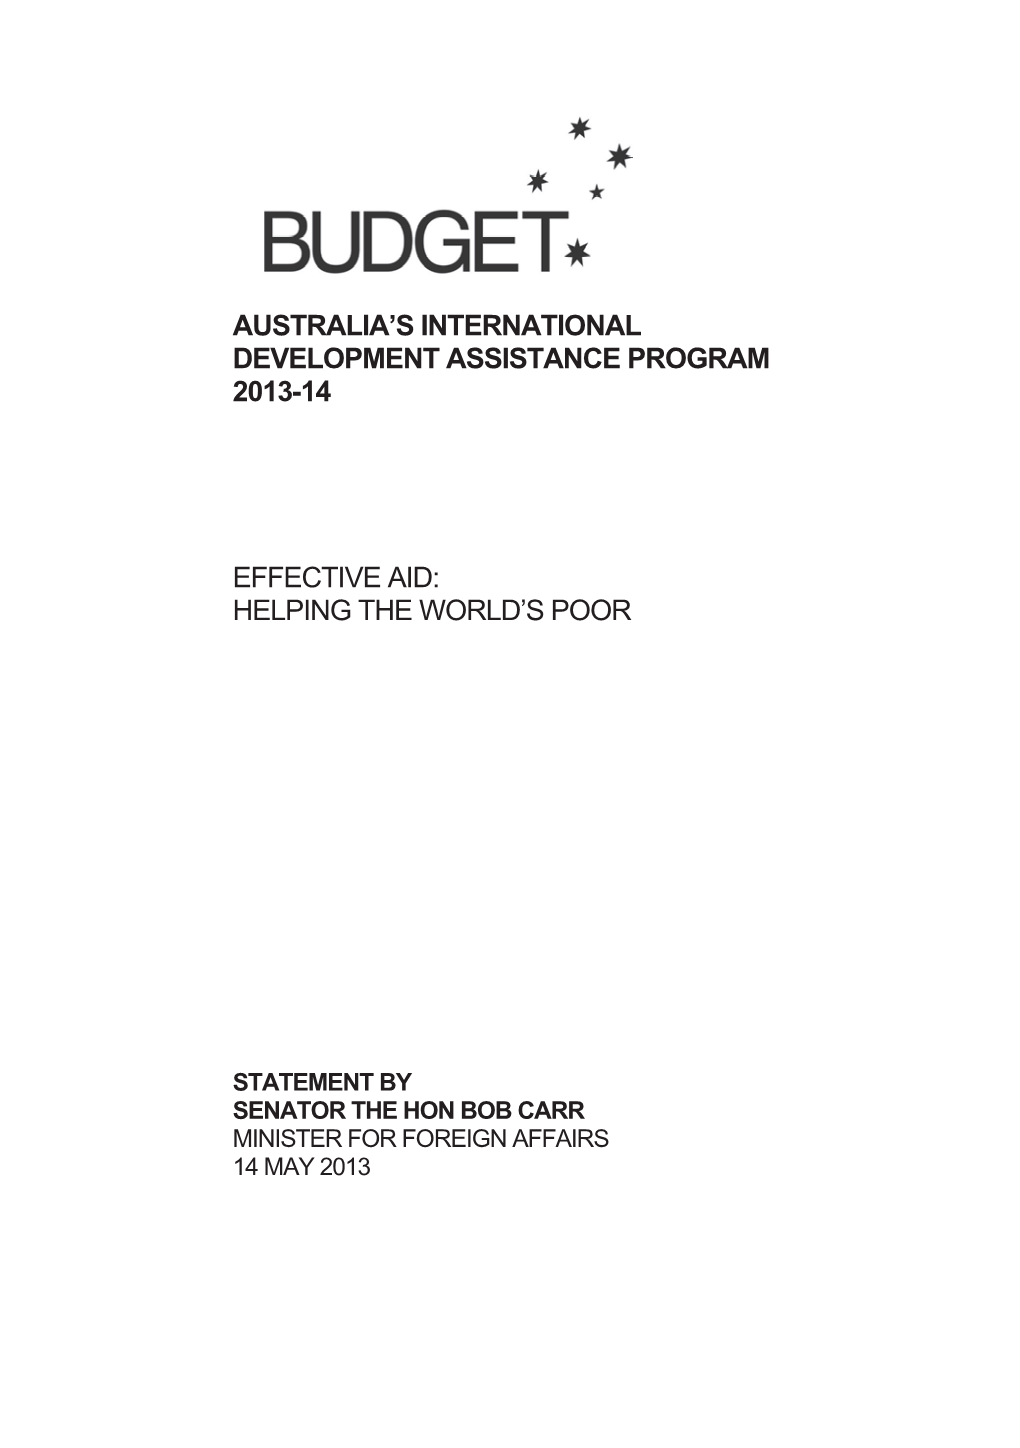 Budget 2013-14